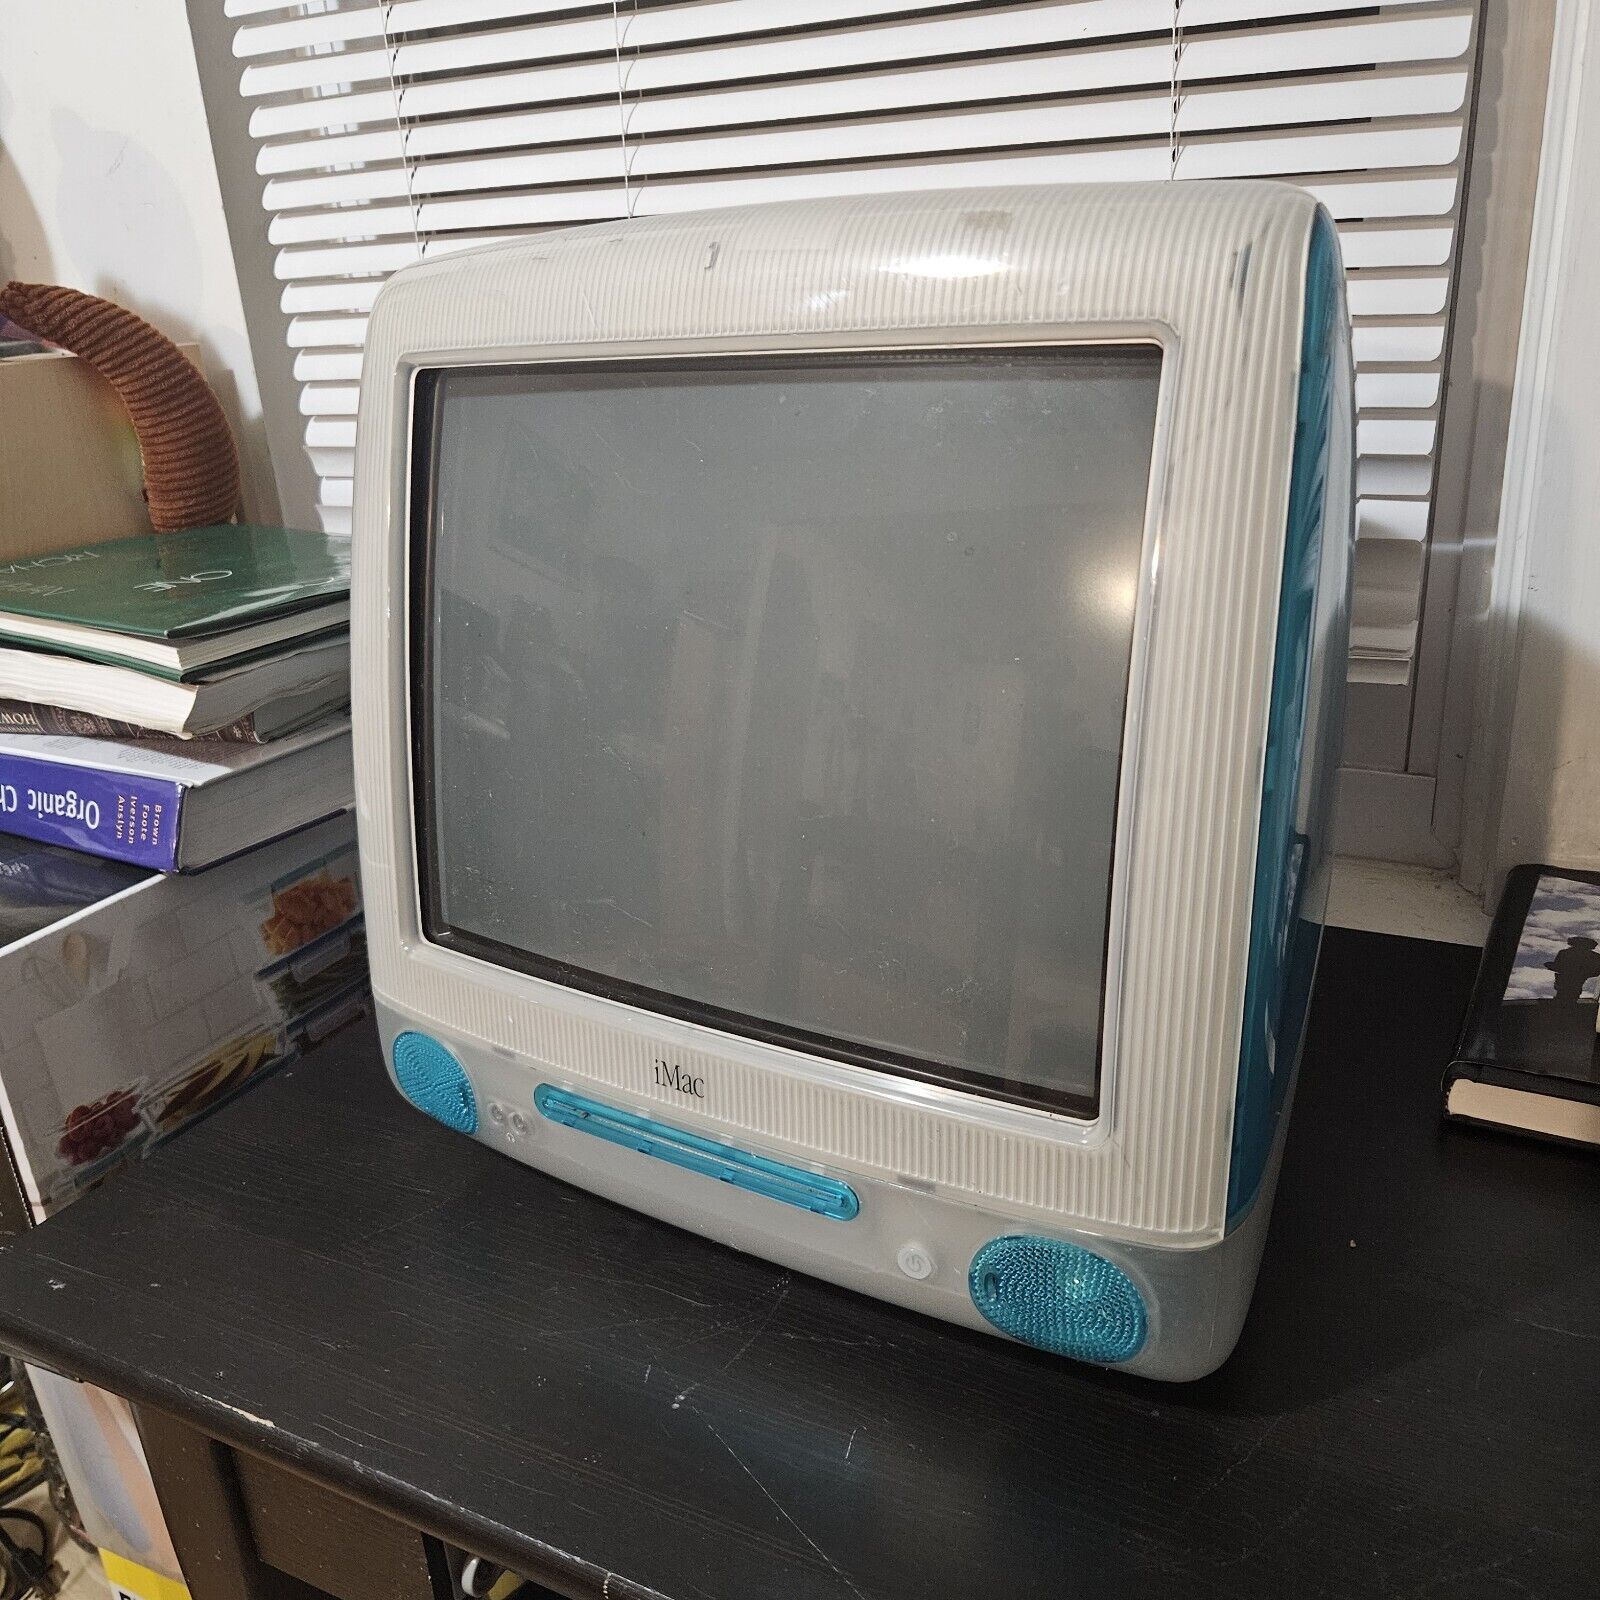 Apple iMac G3 1993-1999 Bondi Blue Desktop Computer